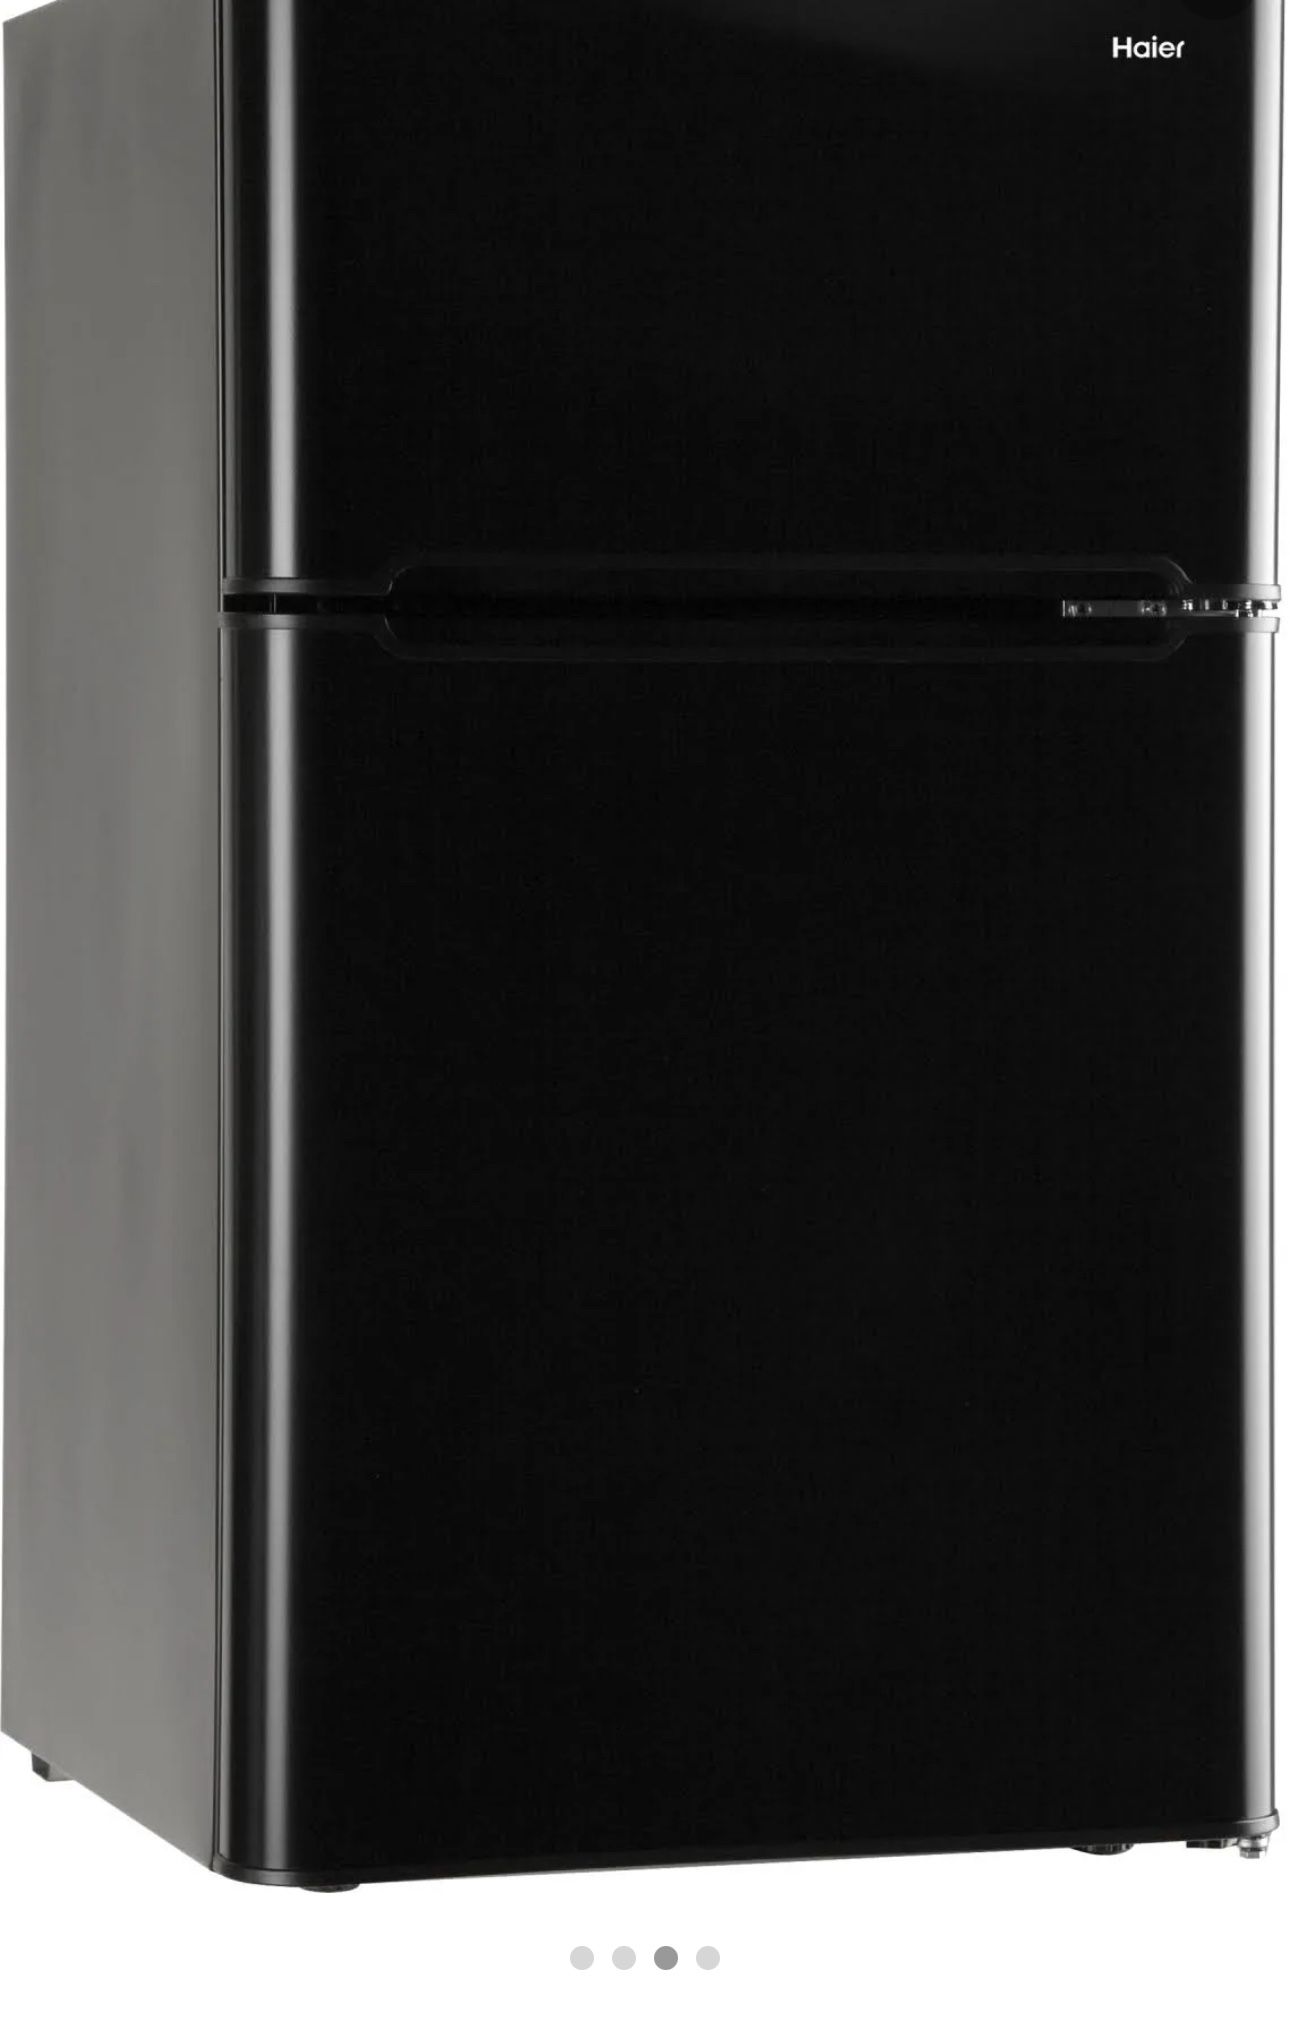 haier mini refrigerator 